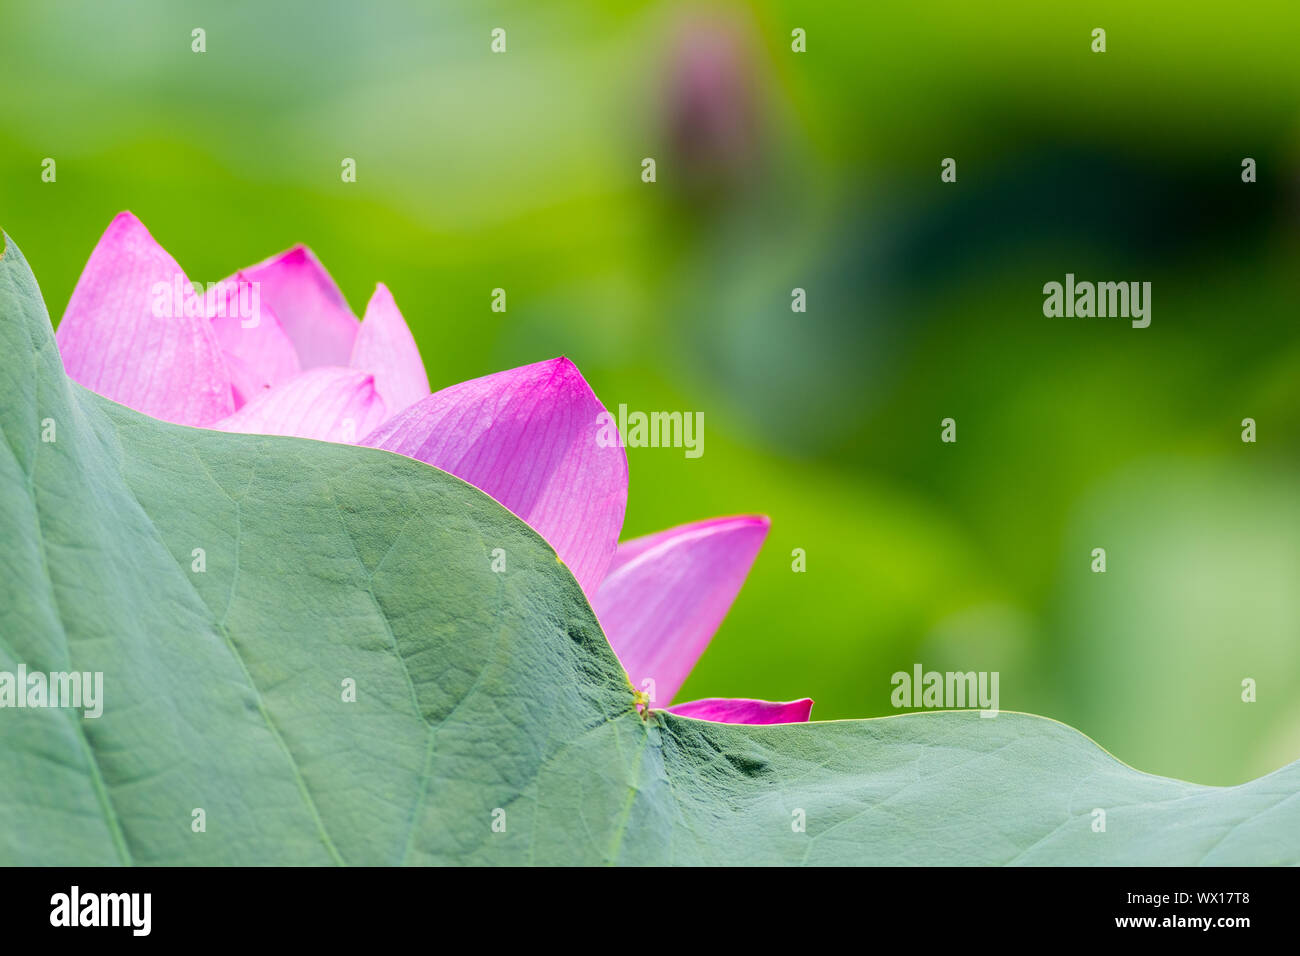 summer natural scene of lotus flower Stock Photo